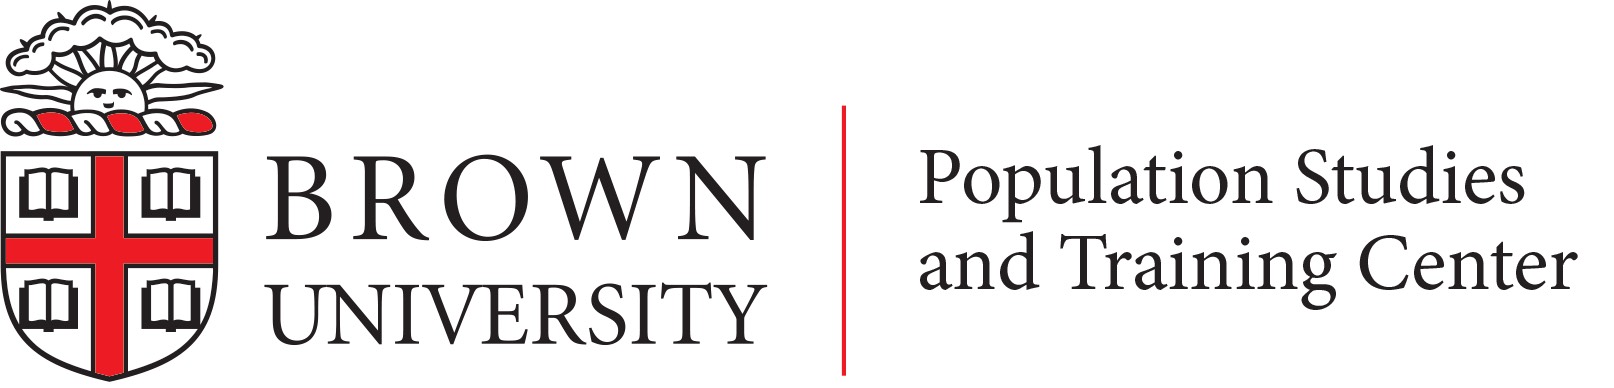 PSTC Brown University